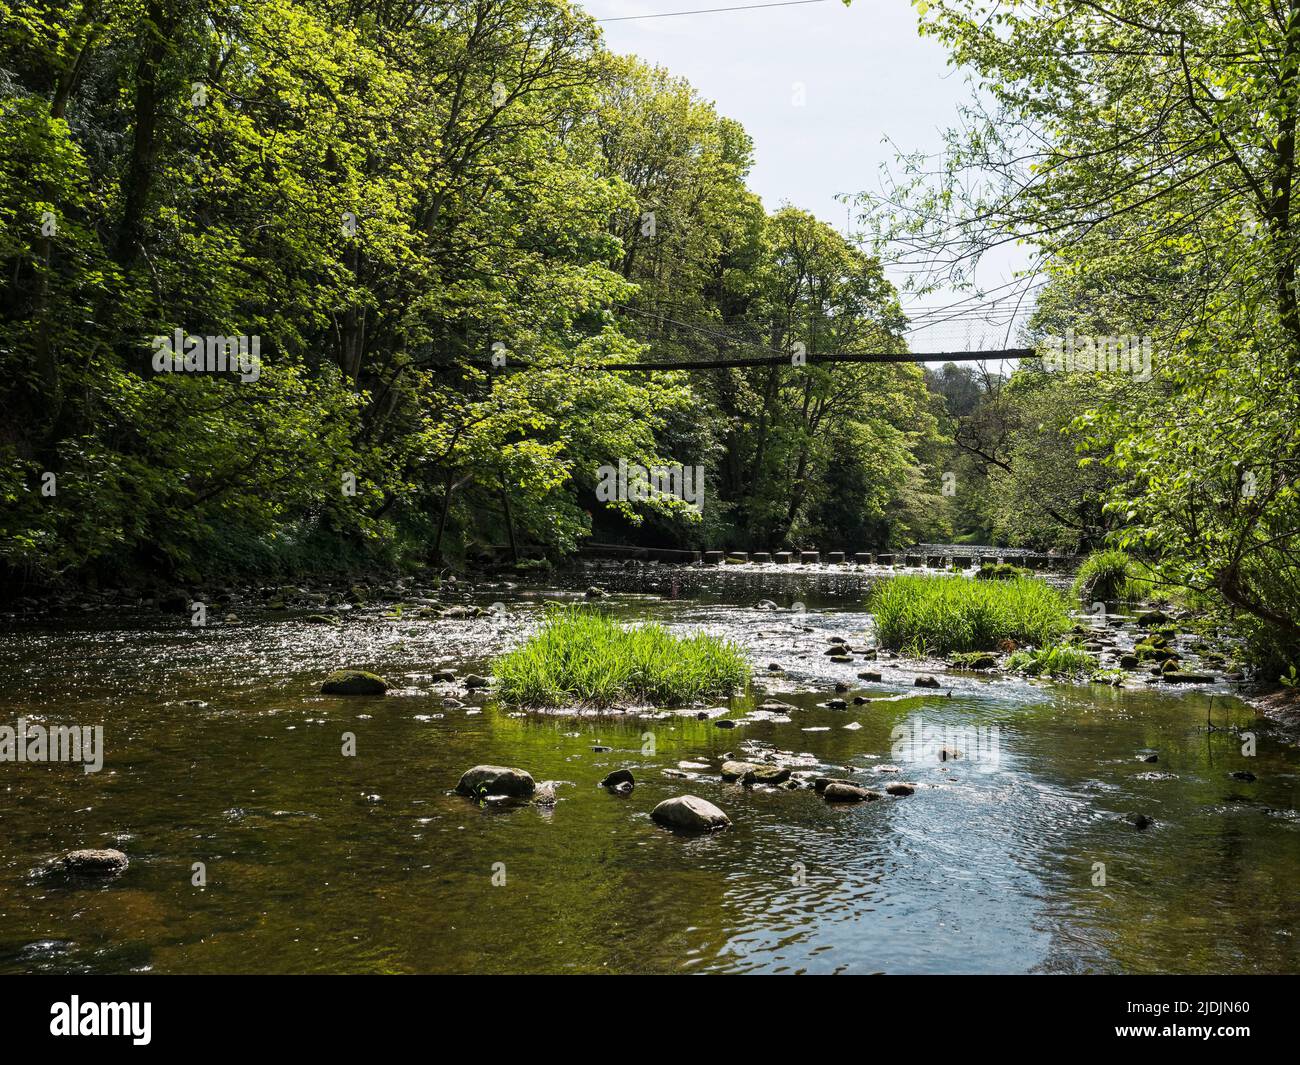 Suspension bridge over the river Wansbeck at Bothal, Northumberland, UK Stock Photo